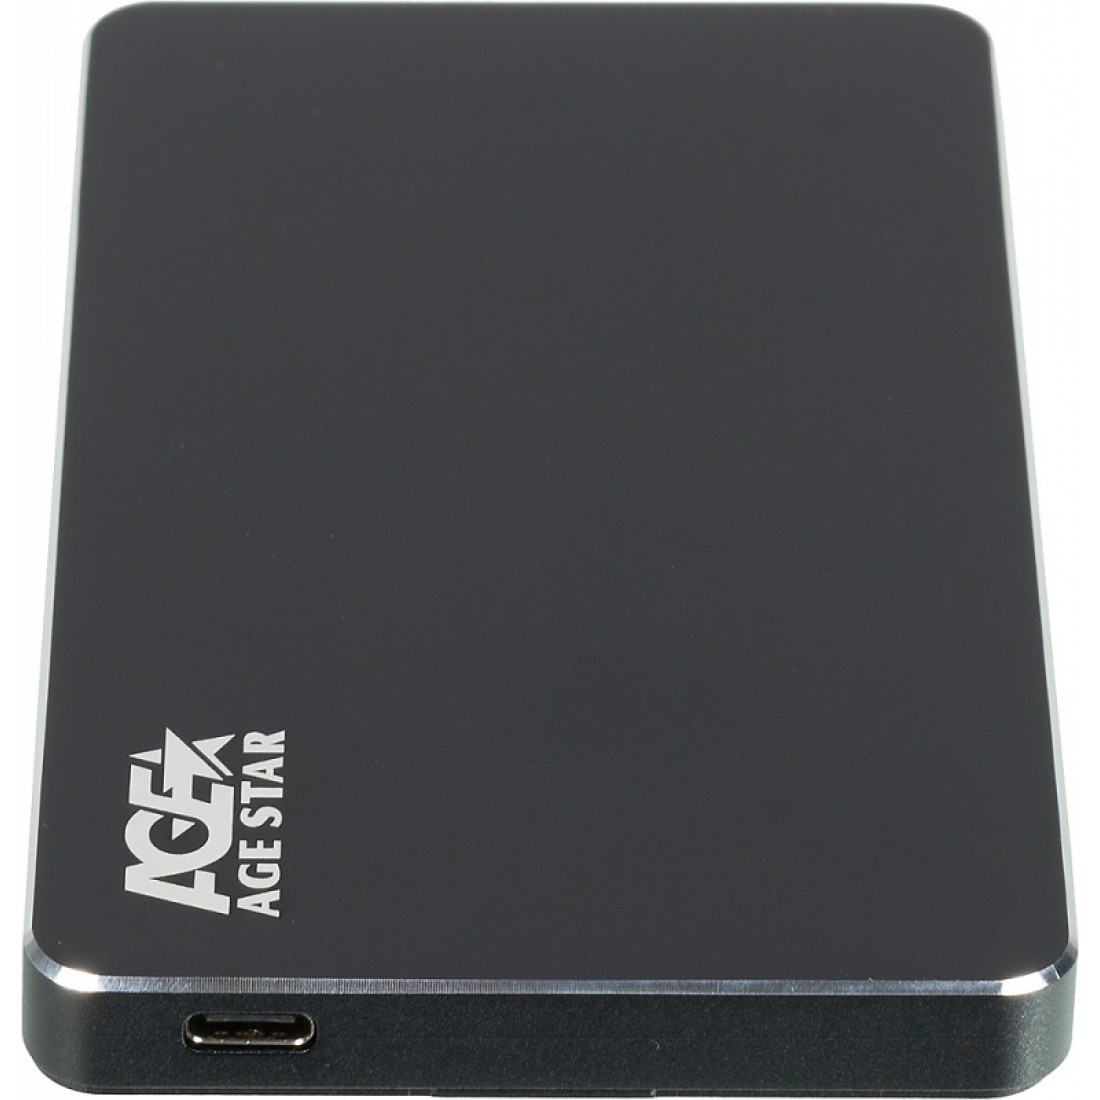 Внешний корпус для HDD/SSD AgeStar 3UB2AX2 SATA I/II/III алюминий черный 2.5 внешний корпус для hdd ssd agestar 3ub2ax1 sata i ii iii алюминий черный 2 5